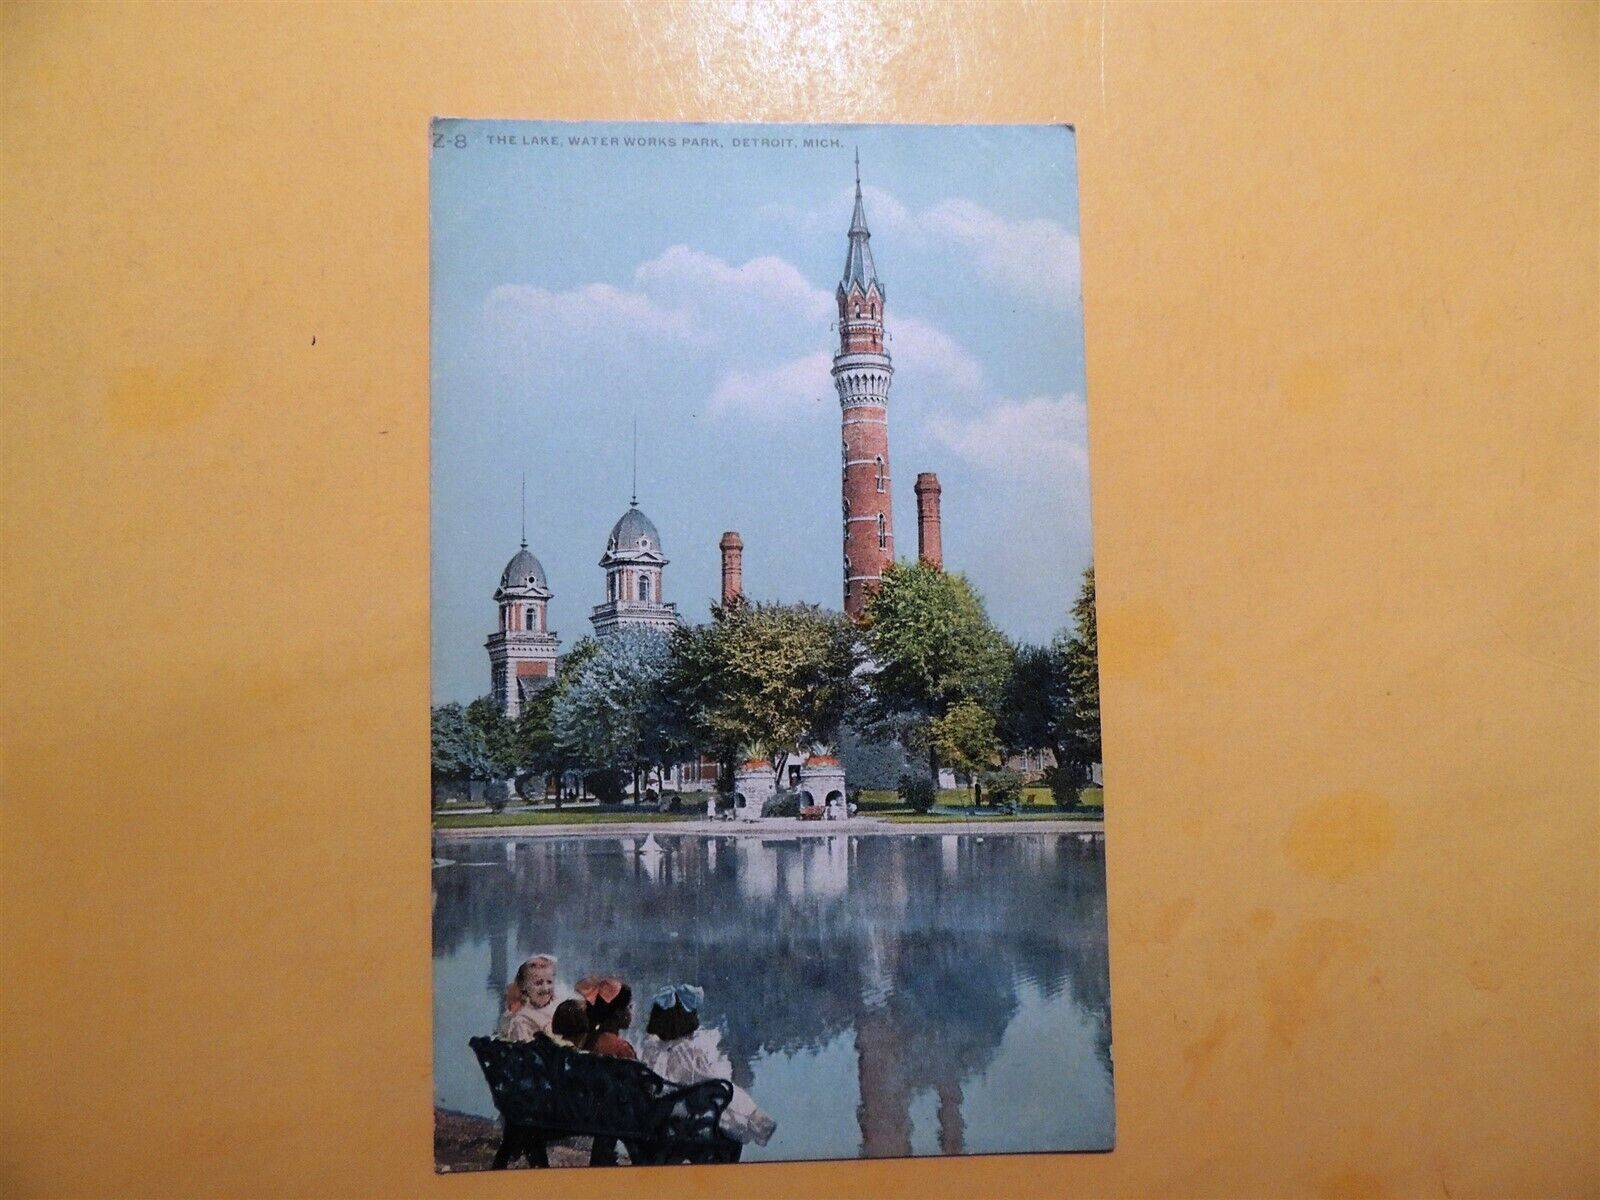 Detroit Michigan vintage postcard The Lake at Waterworks Park 